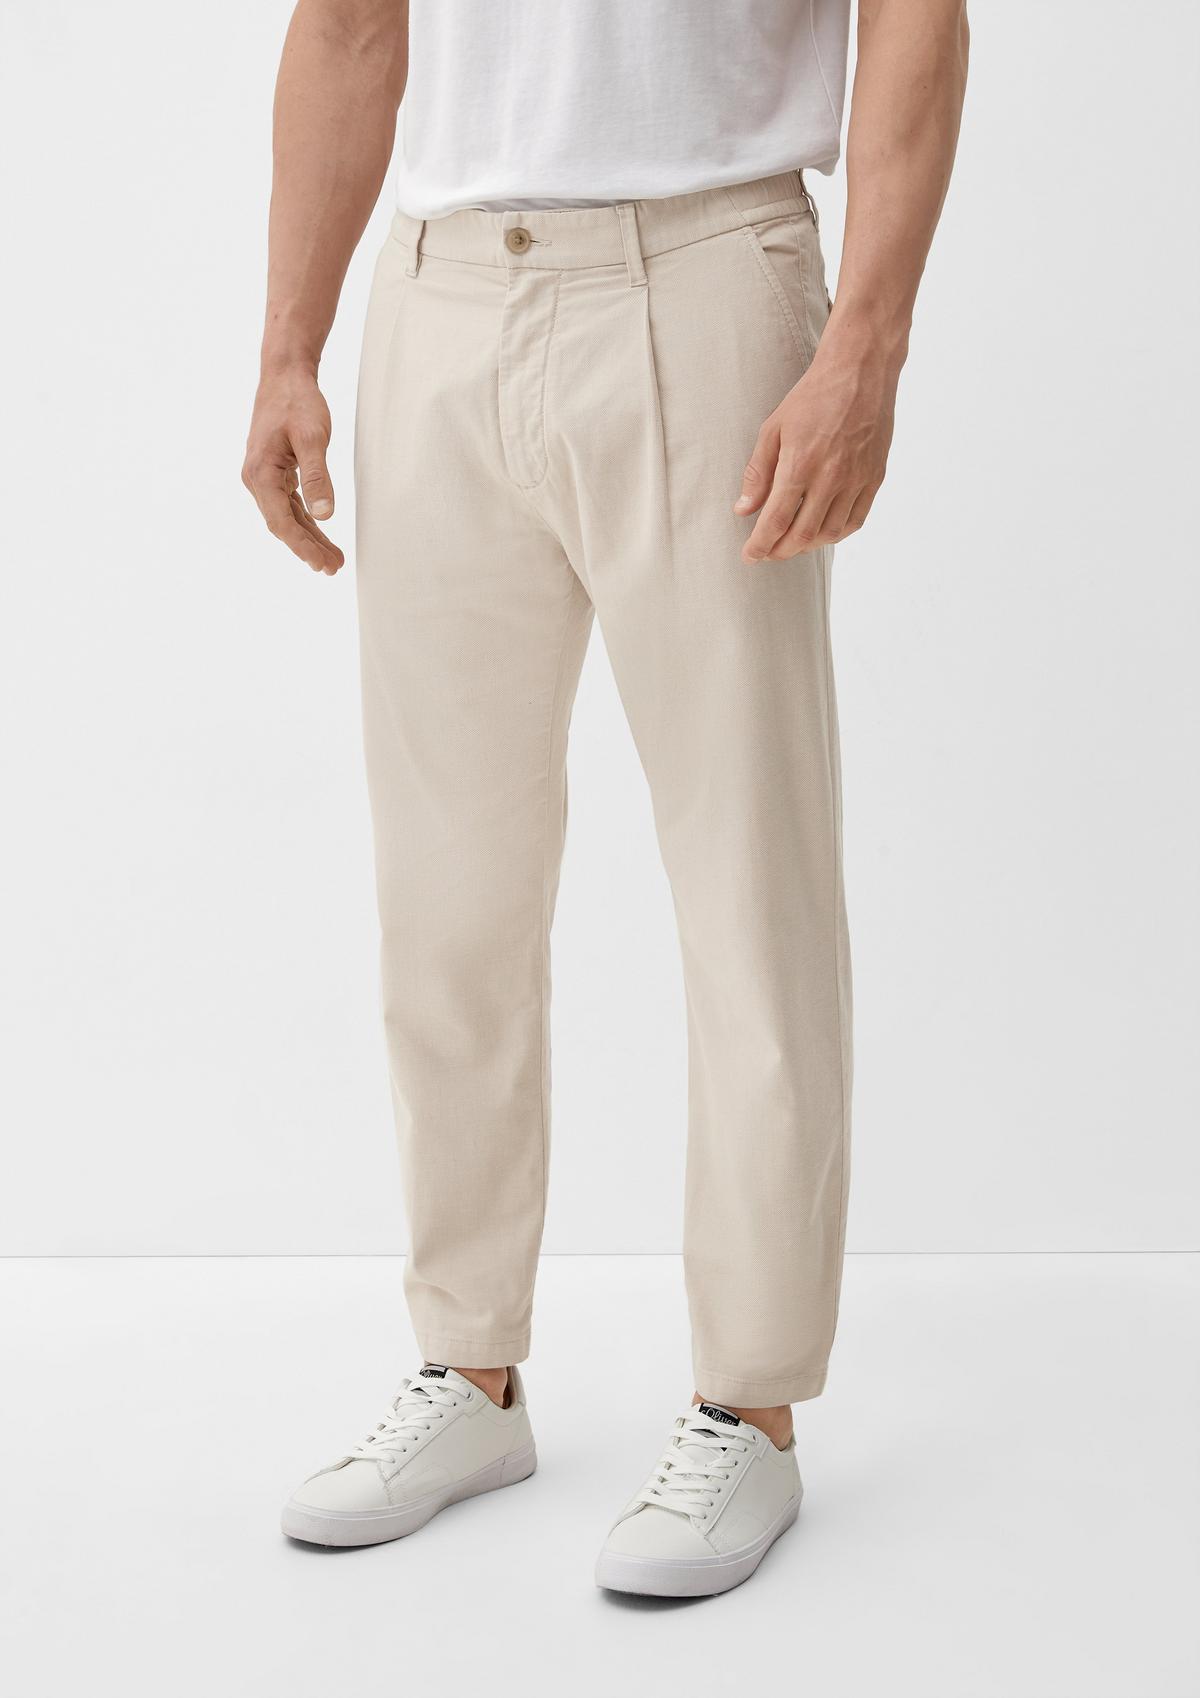 s.Oliver Relaxed: látkové kalhoty s rovnými nohavicemi